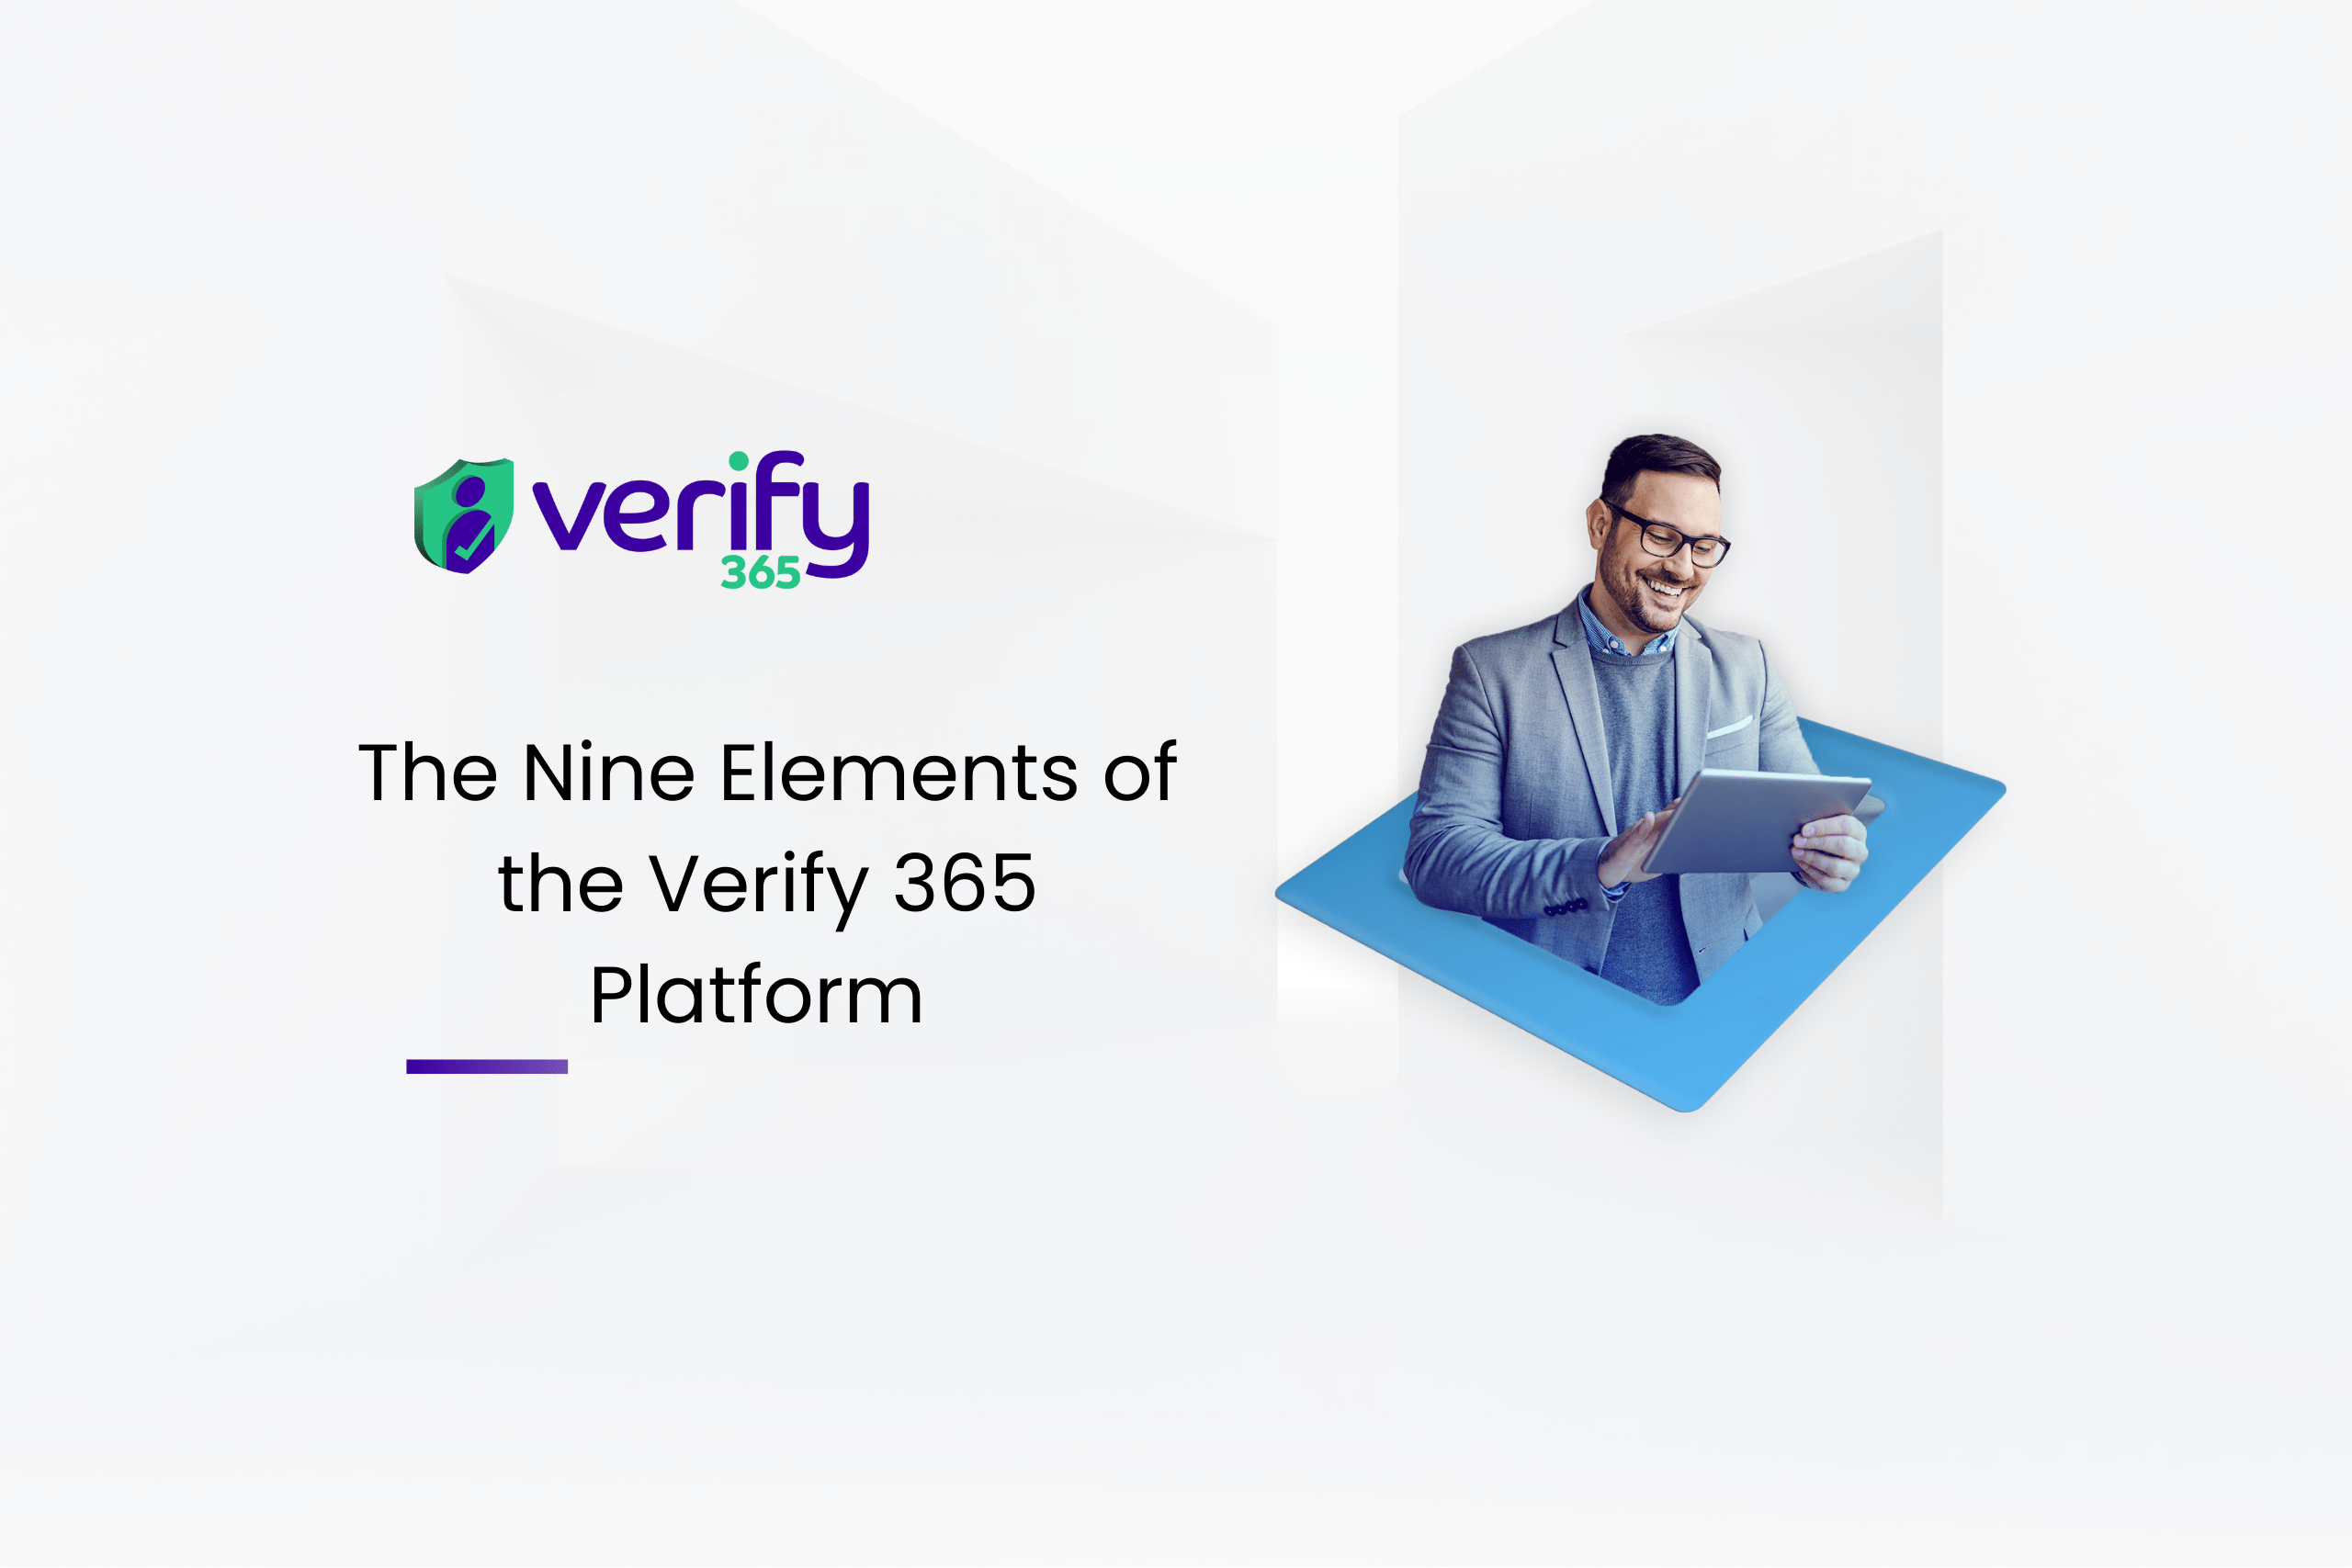 The nine elements of the Verify 365 platform